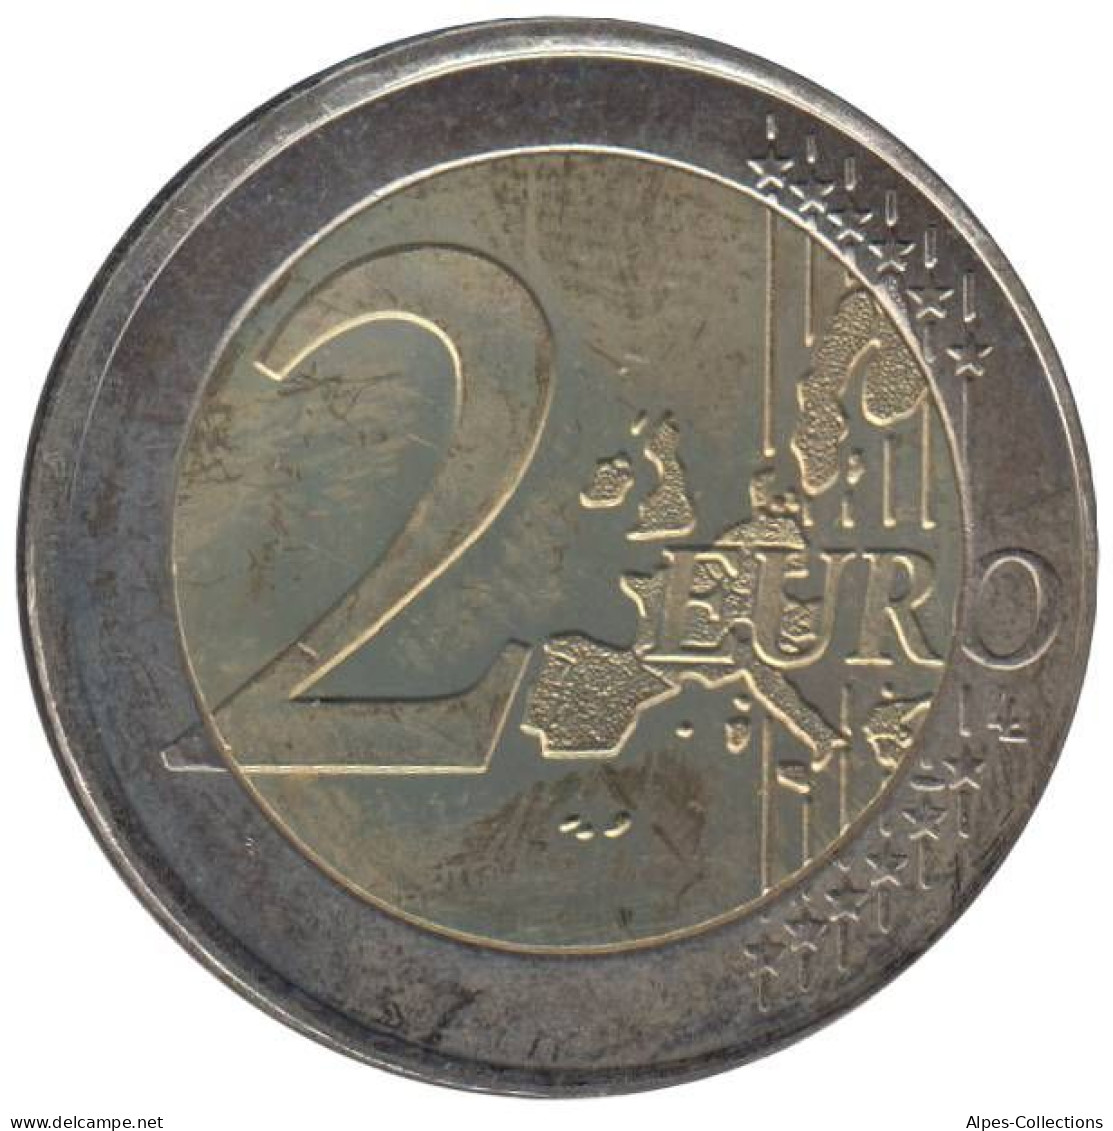 GR20002.2 - GRECE - 2 Euros - 2002 S - Atelier Finlande - Greece